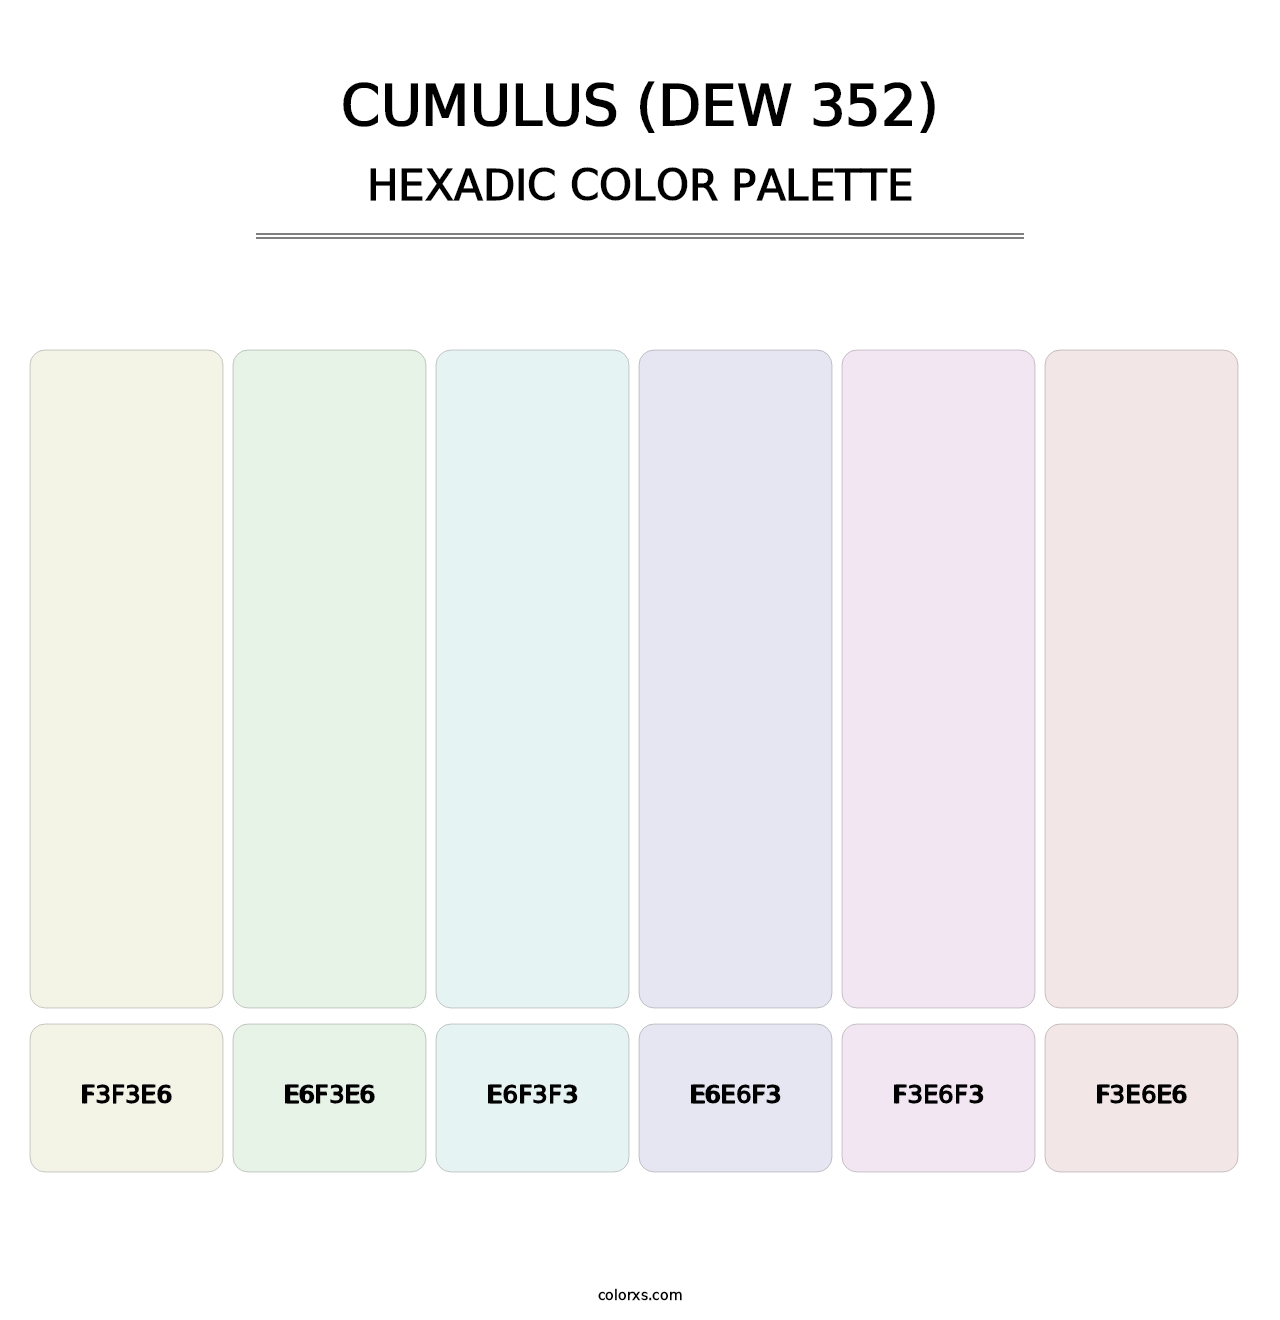 Cumulus (DEW 352) - Hexadic Color Palette